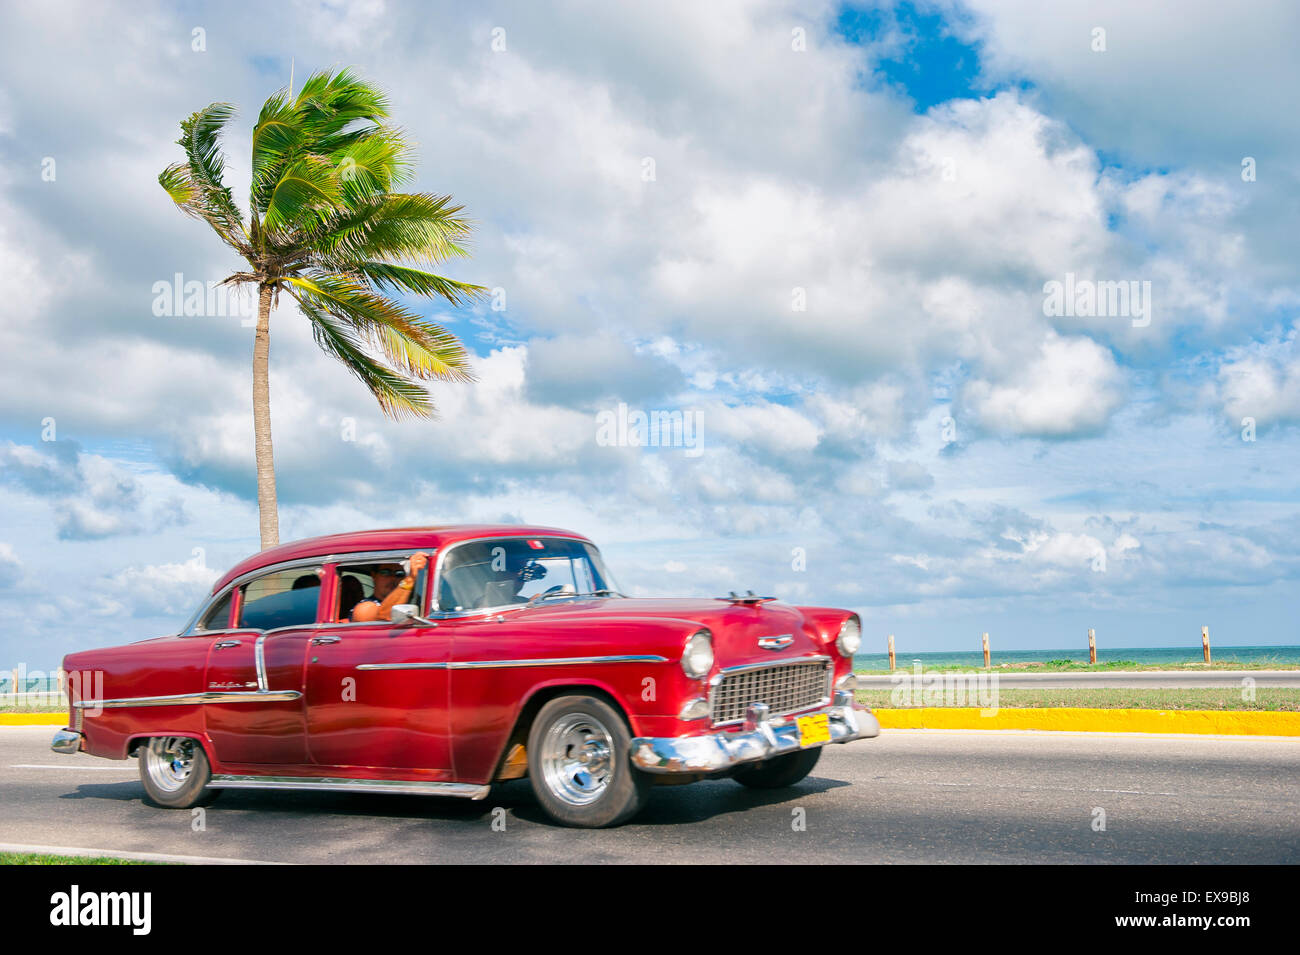 VARADERO, CUBA - JUNE 07, 2011: Brightly painted classic vintage American car drives along a coastal road next to a palm tree. Stock Photo